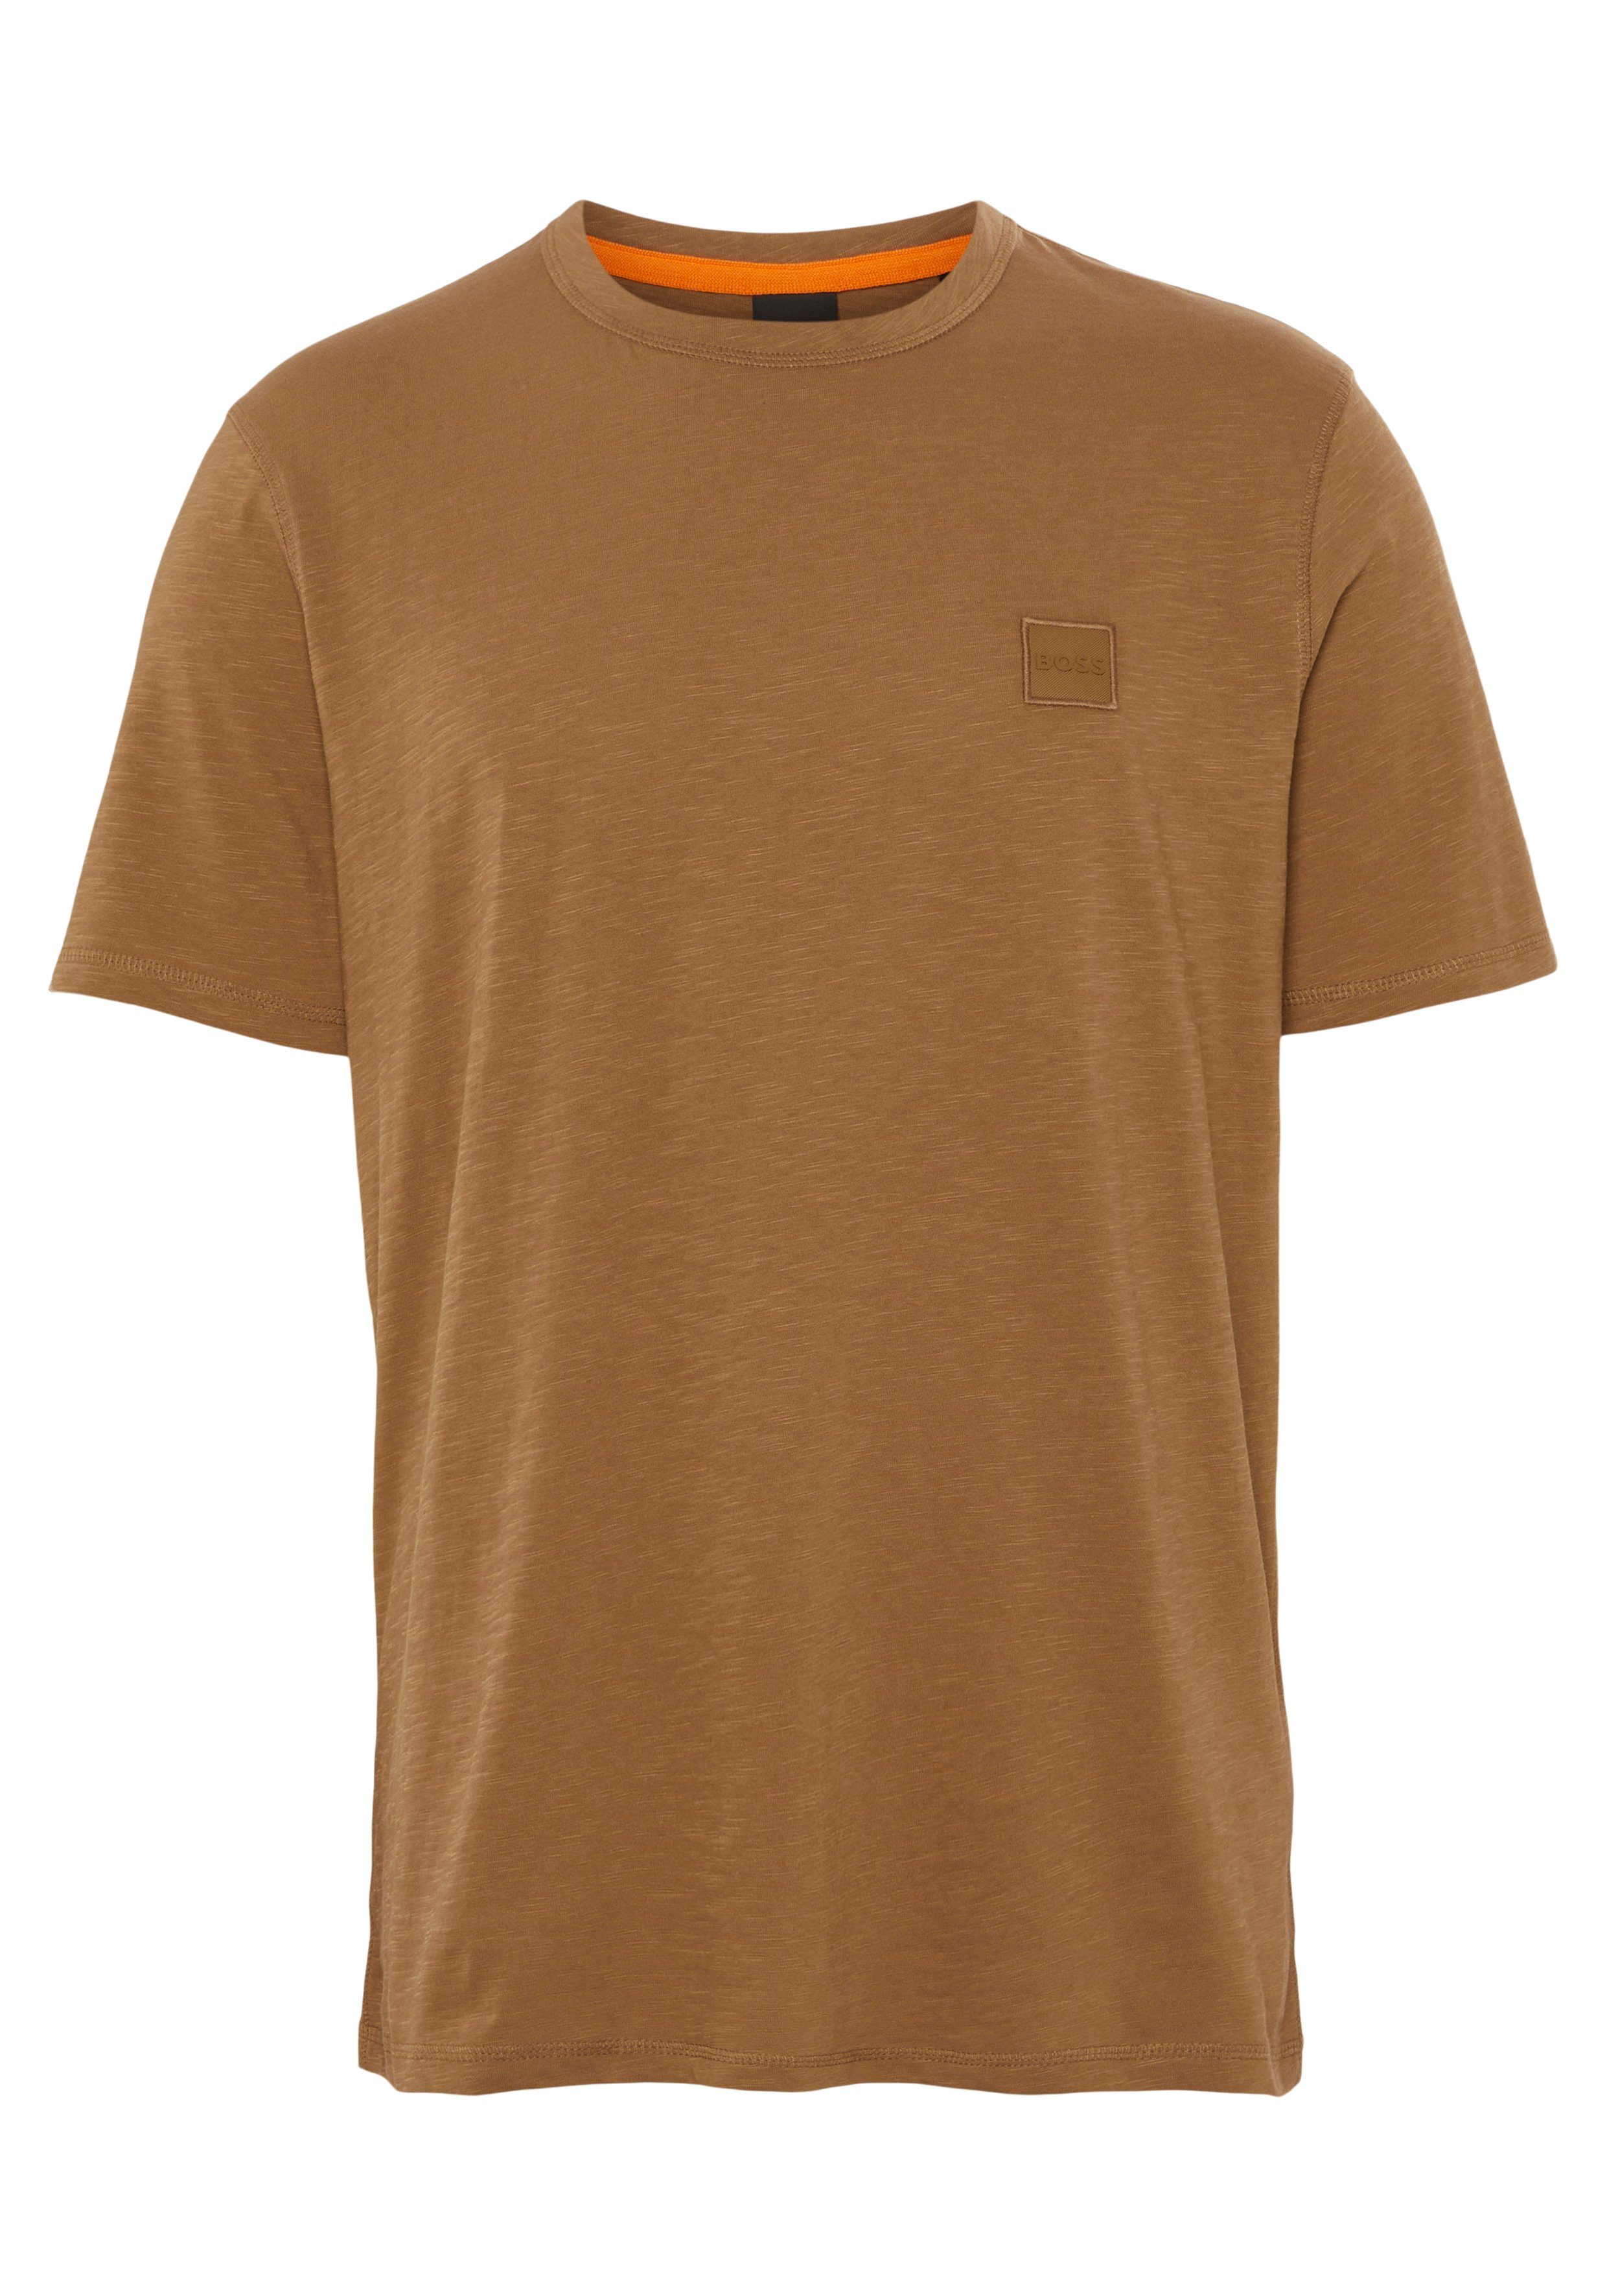 (Packung) Tegood BOSS ORANGE verziert open_beige Overlock-Nähten T-Shirt mit